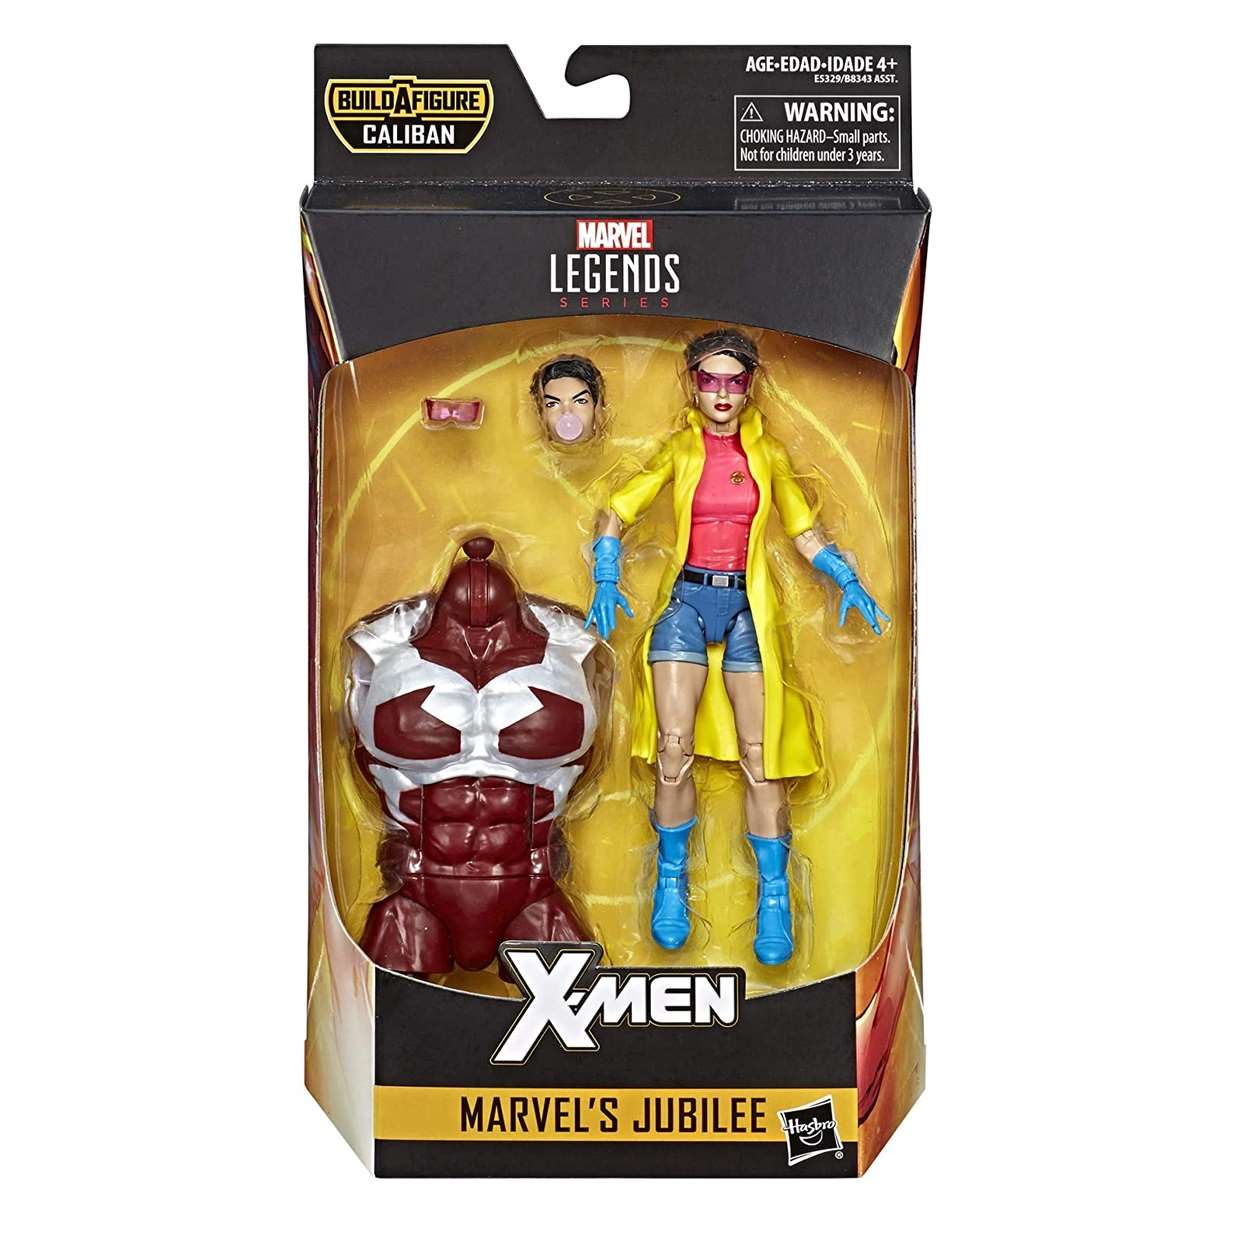 Jubilee Figura Marvel B A F Caliban X - Men Legends 6 Pulg